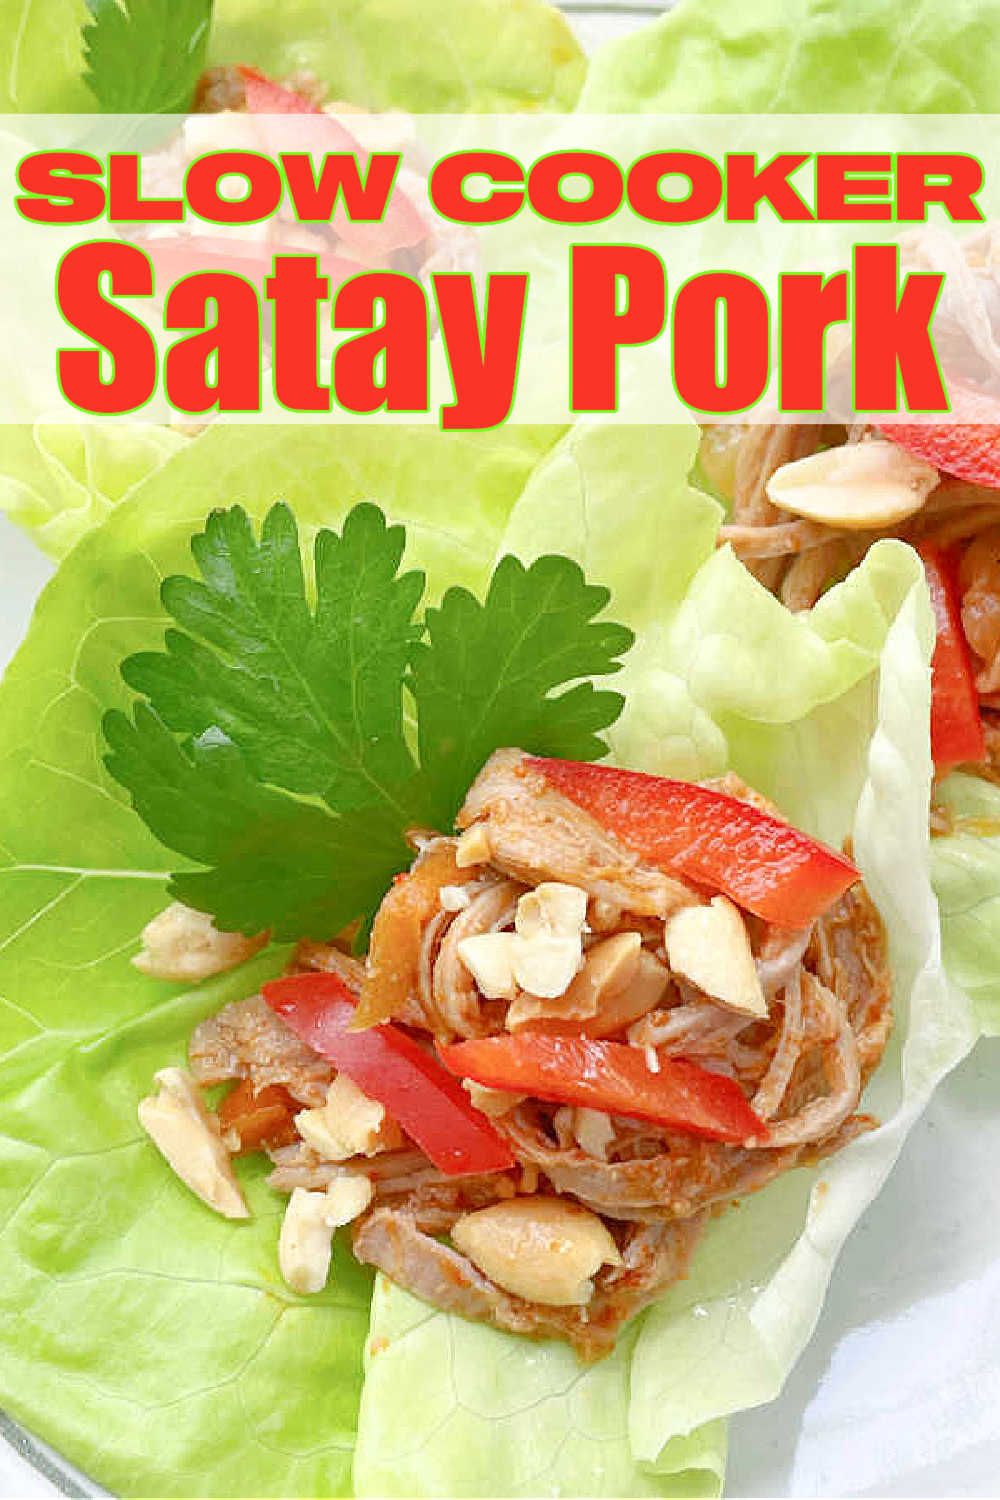 Slow Cooker Satay Pork | Foodtastic Mom #slowcookerrecipes #porkrecipes #porksatay #slowcookersataypork